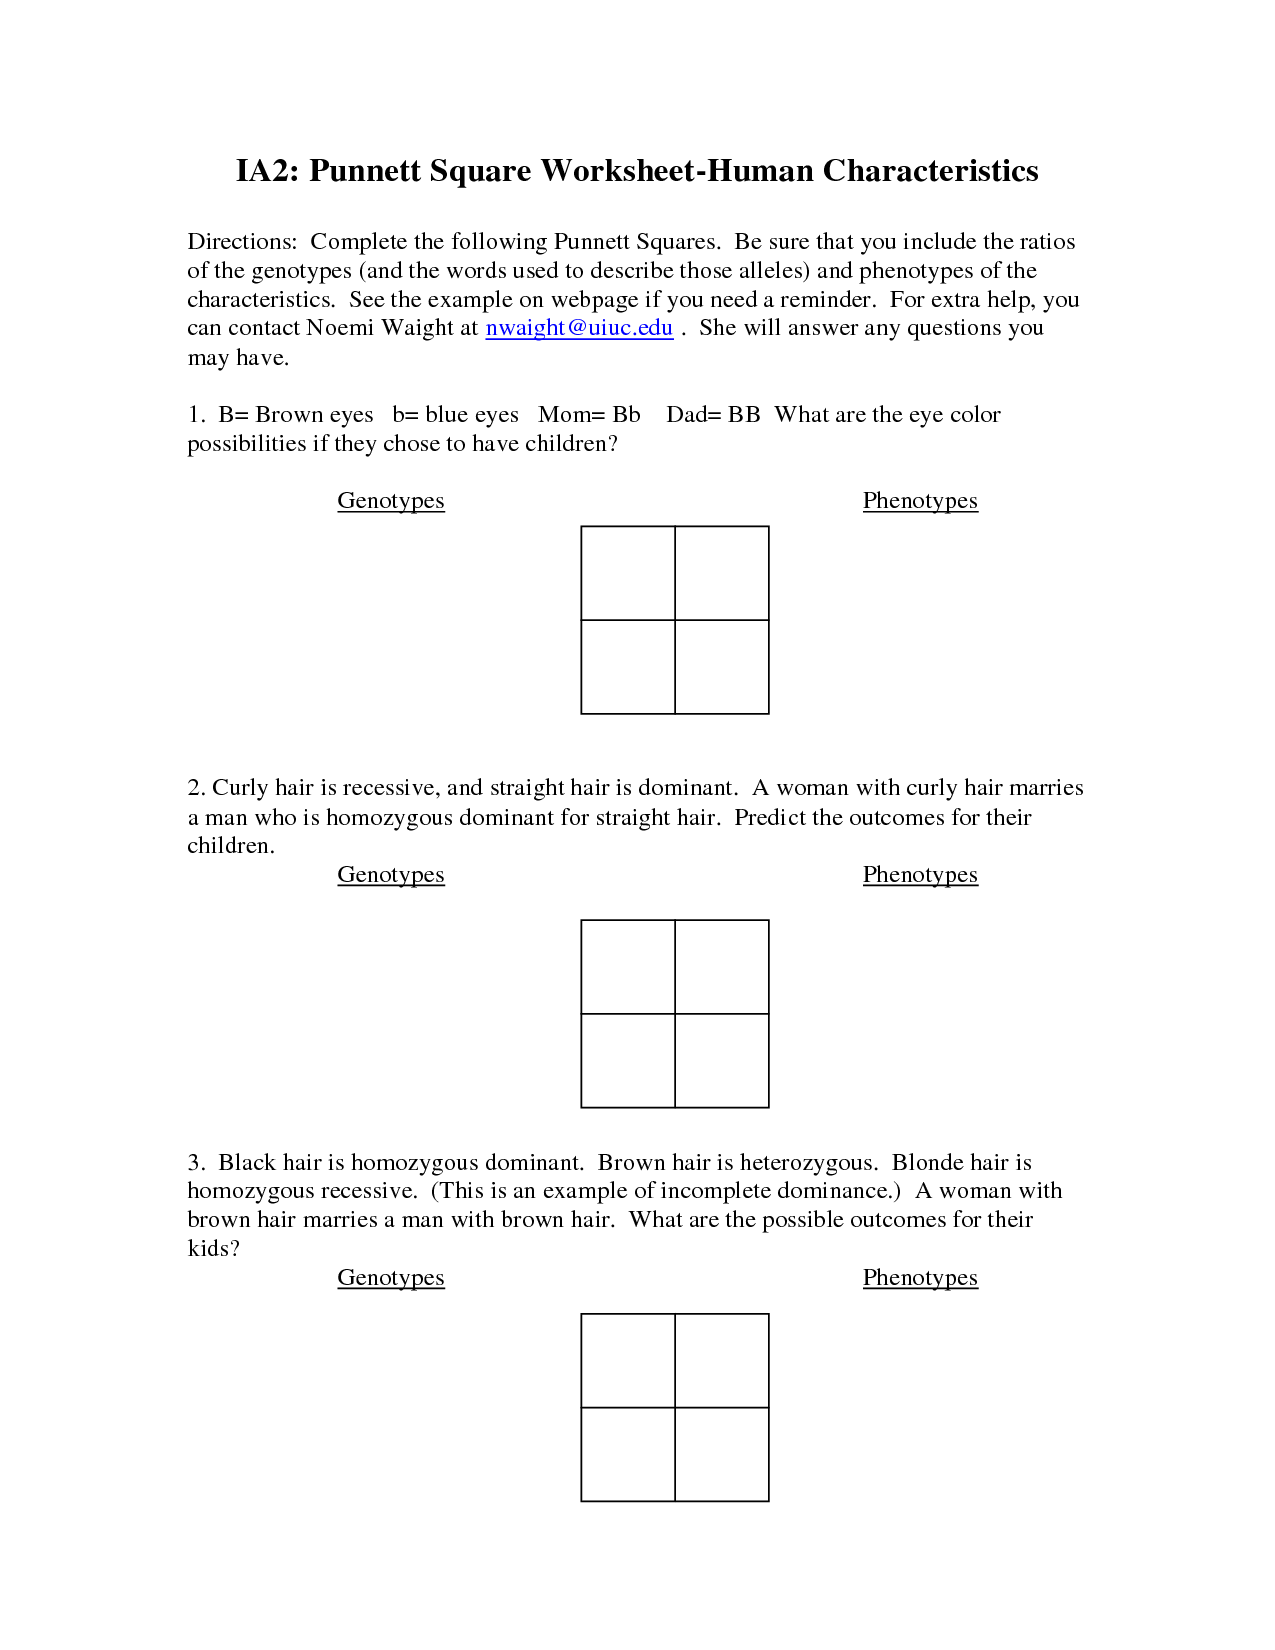 Practice With Monohybrid Punnett Squares Worksheet Answer Key